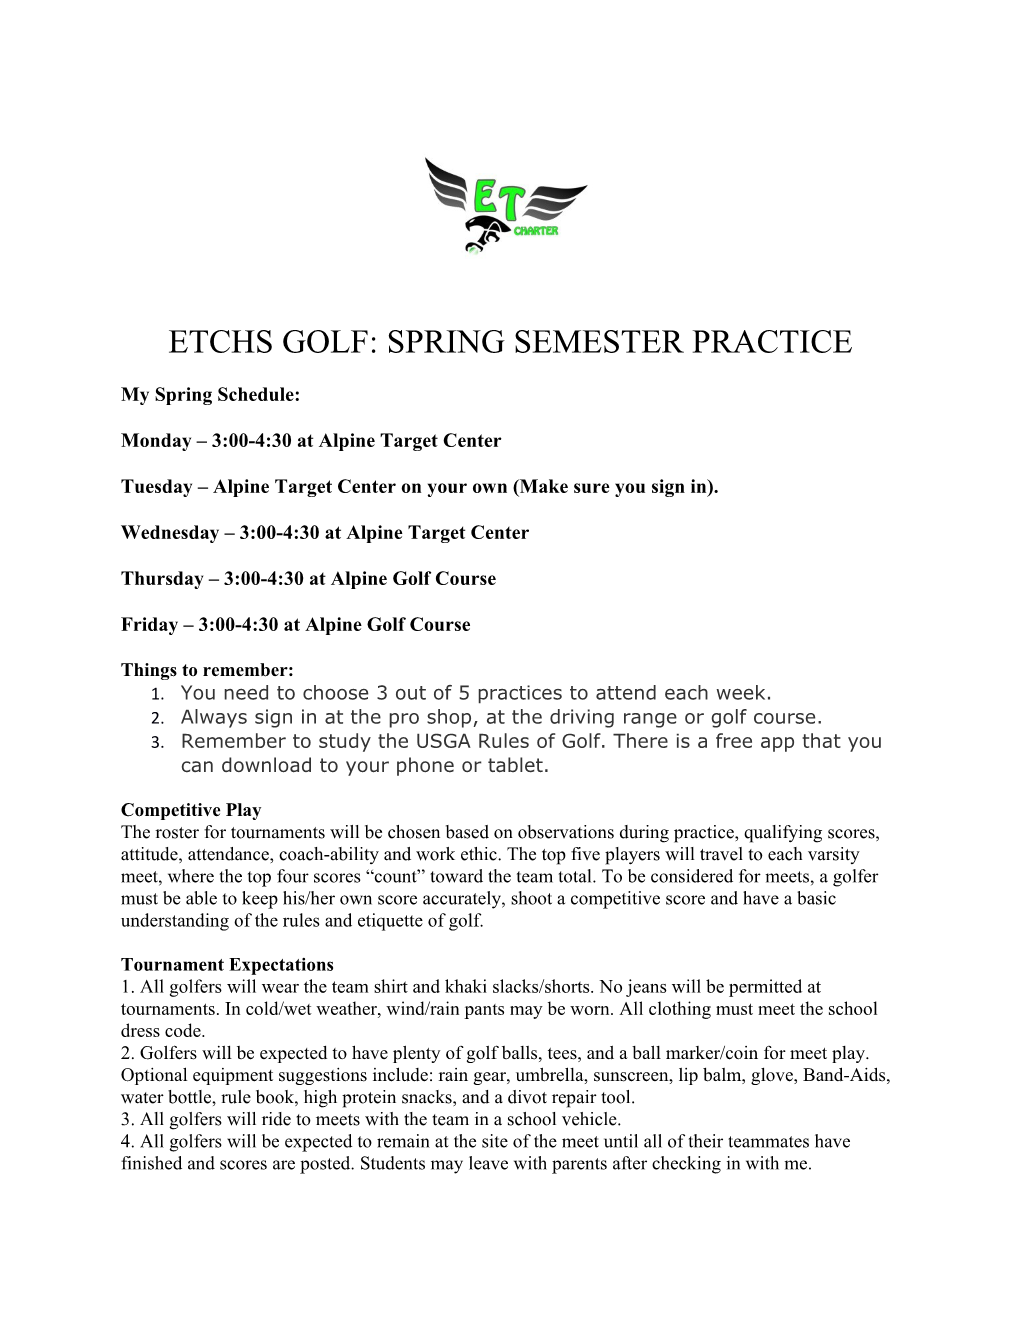 Etchs Golf: Spring Semester Practice